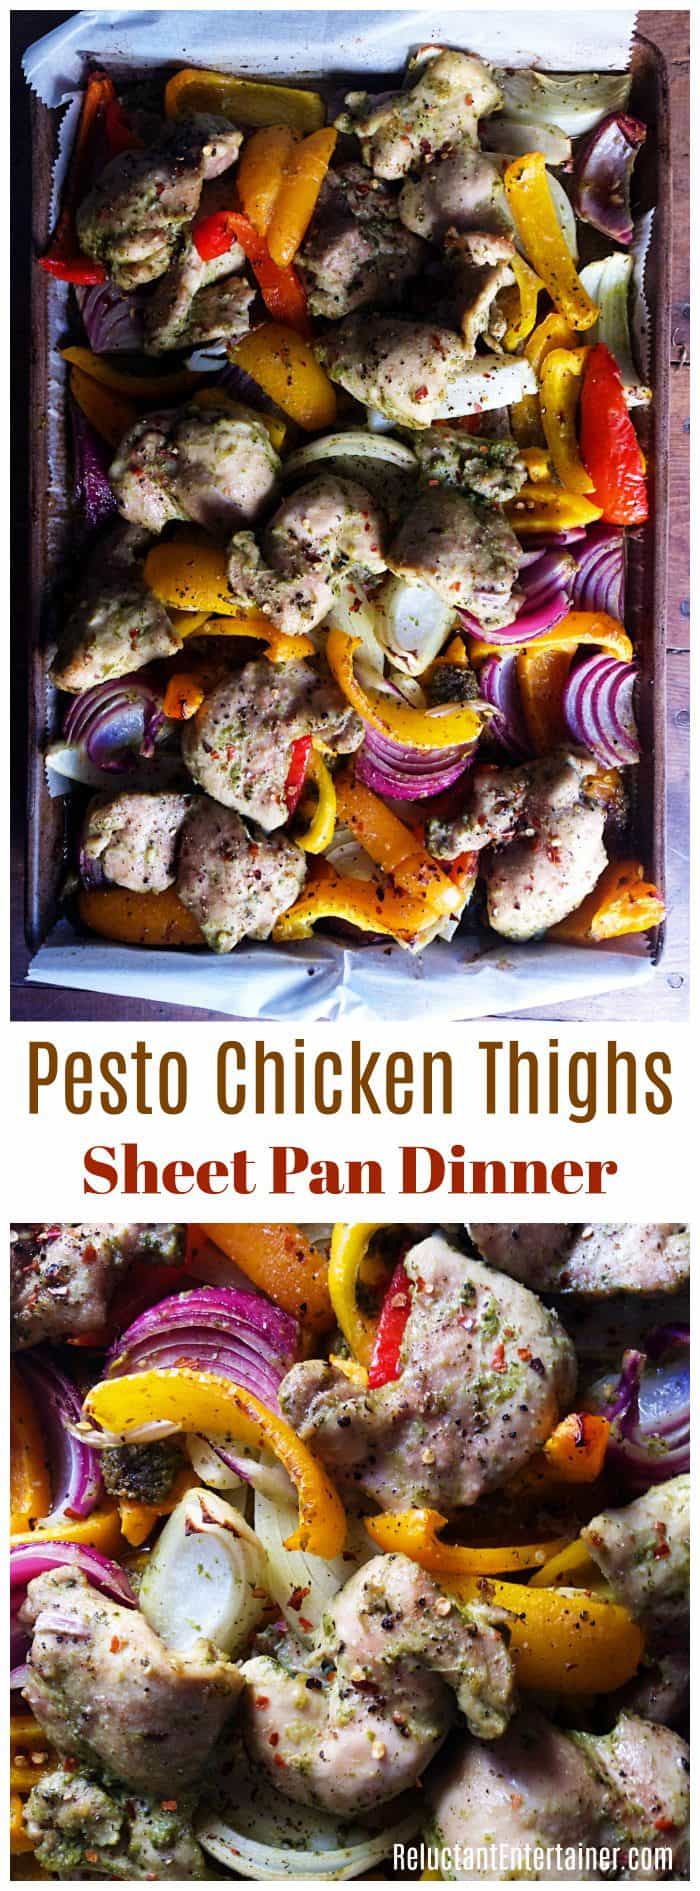 Pesto Chicken Thighs Sheet Pan Dinner